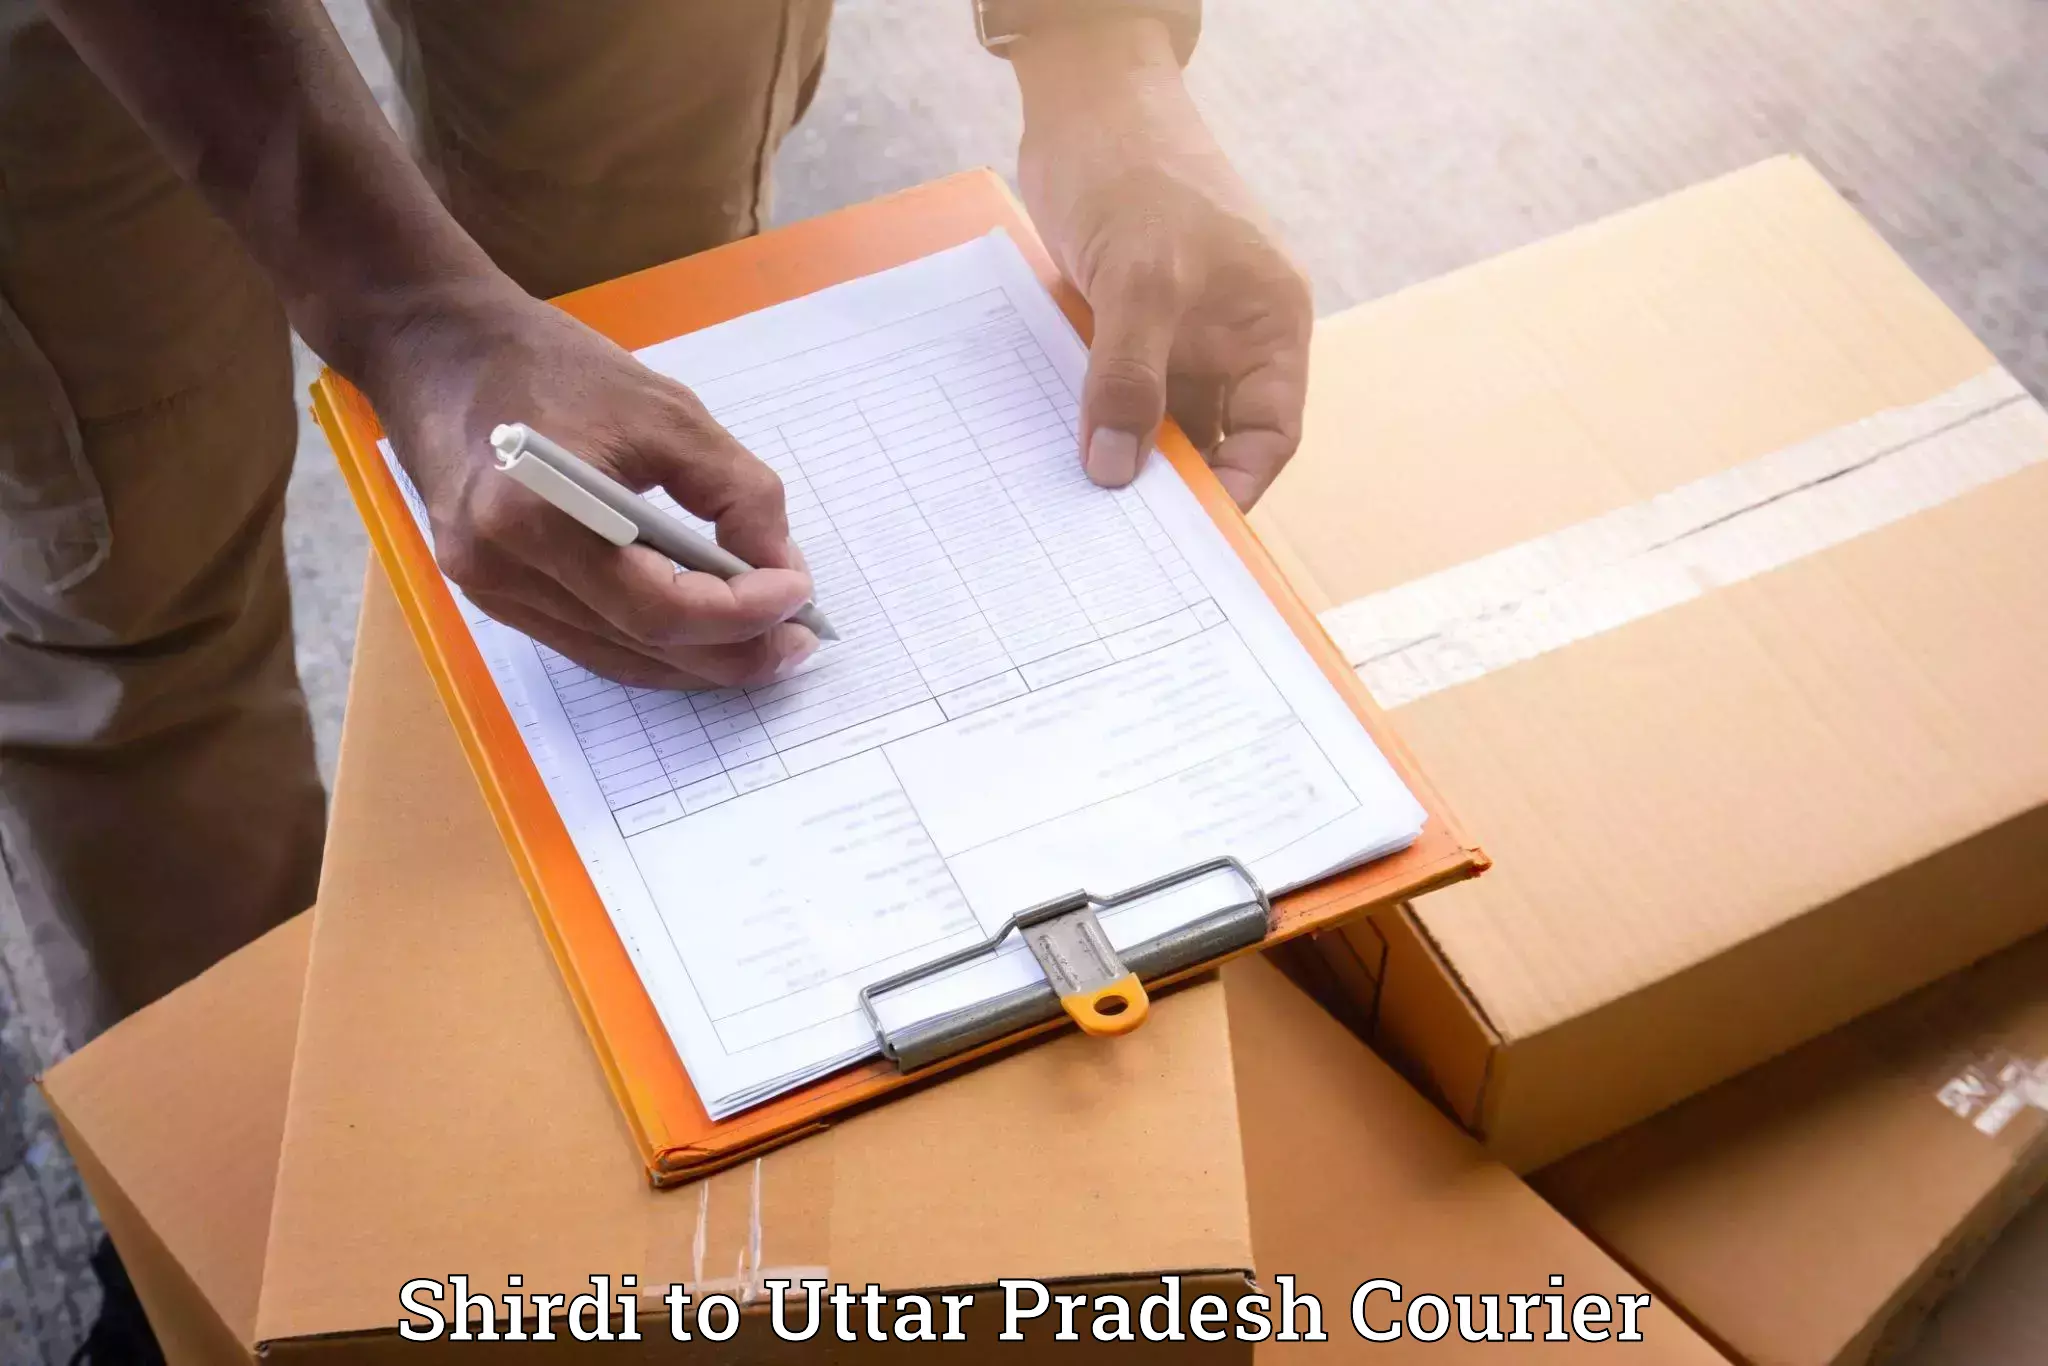 Professional moving company Shirdi to Gajraula